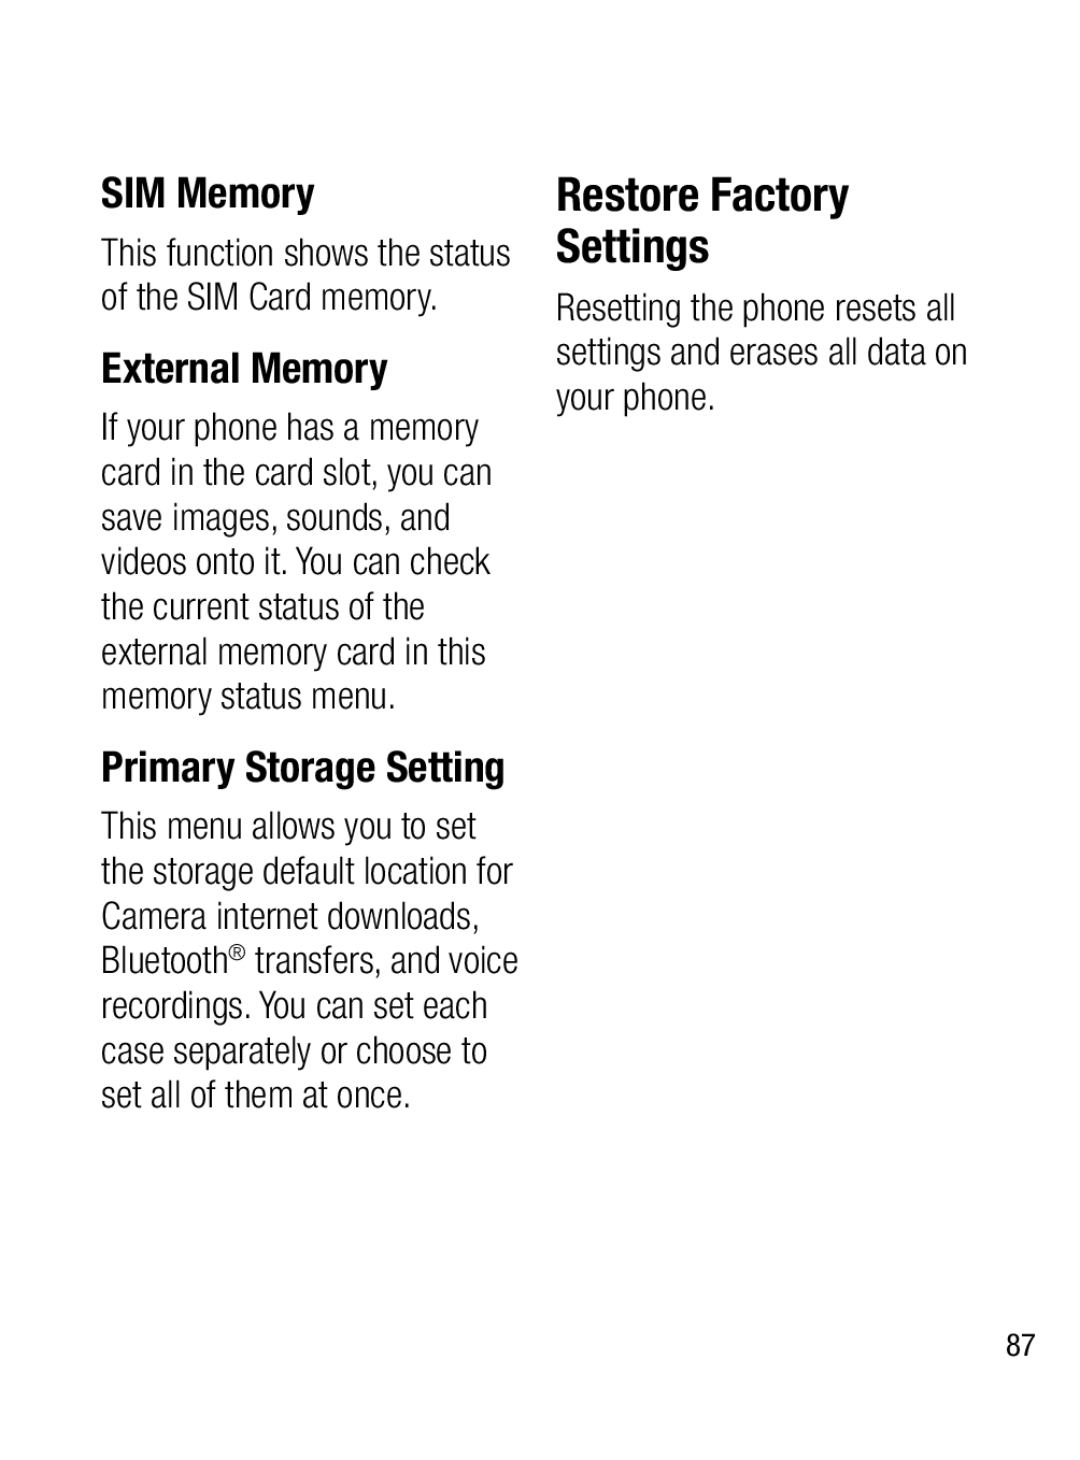 LG Electronics A133CH manual Restore Factory Settings, SIM Memory, External Memory, Primary Storage Setting 